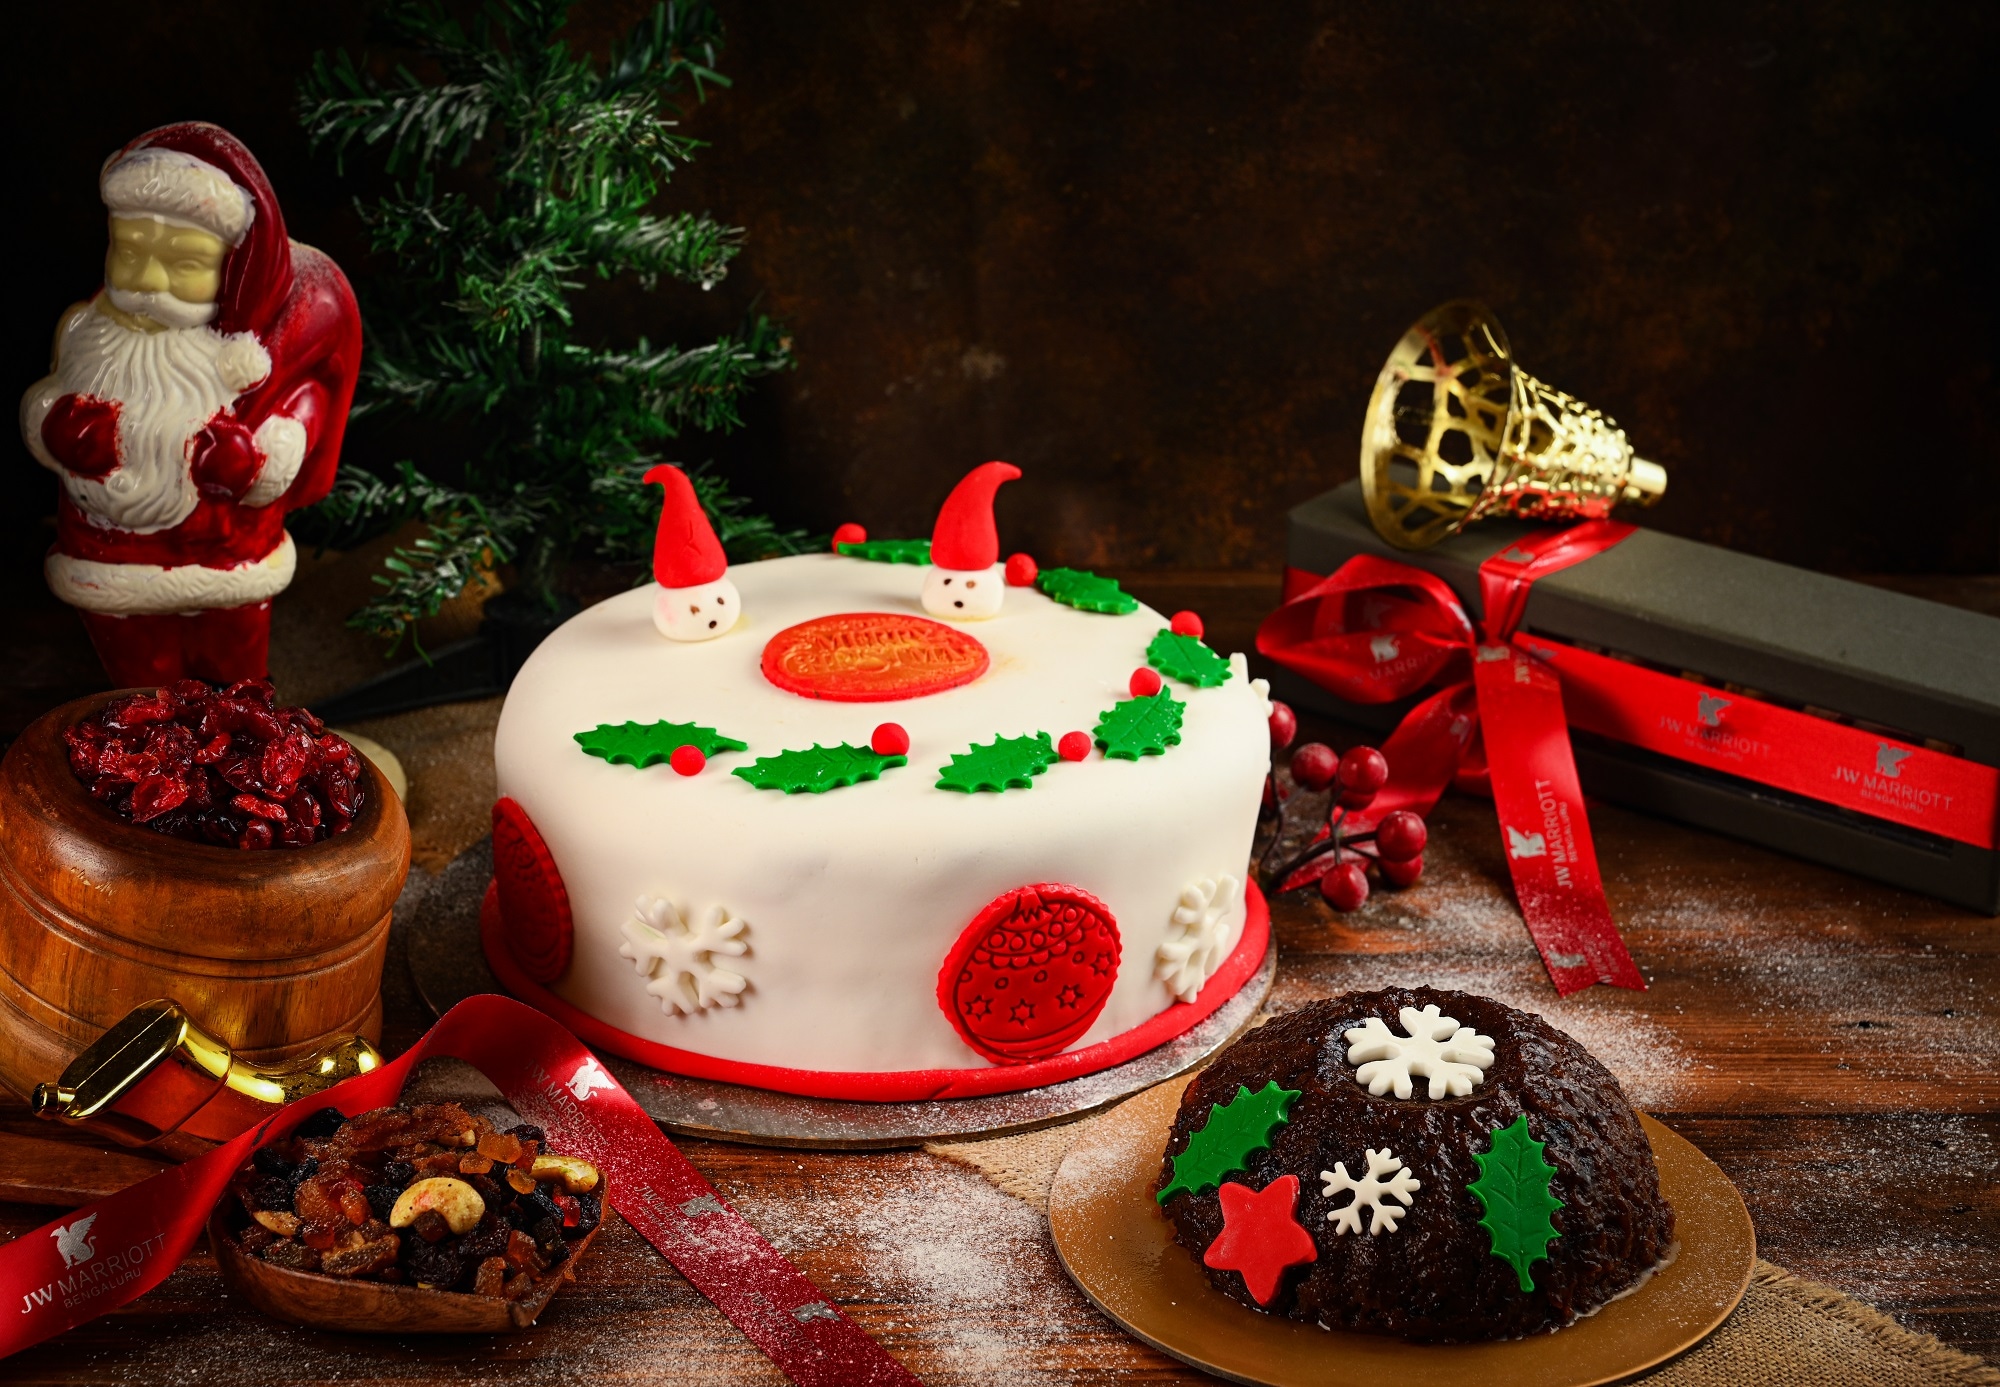 Royal recipe: Rich Christmas Fruit Cake